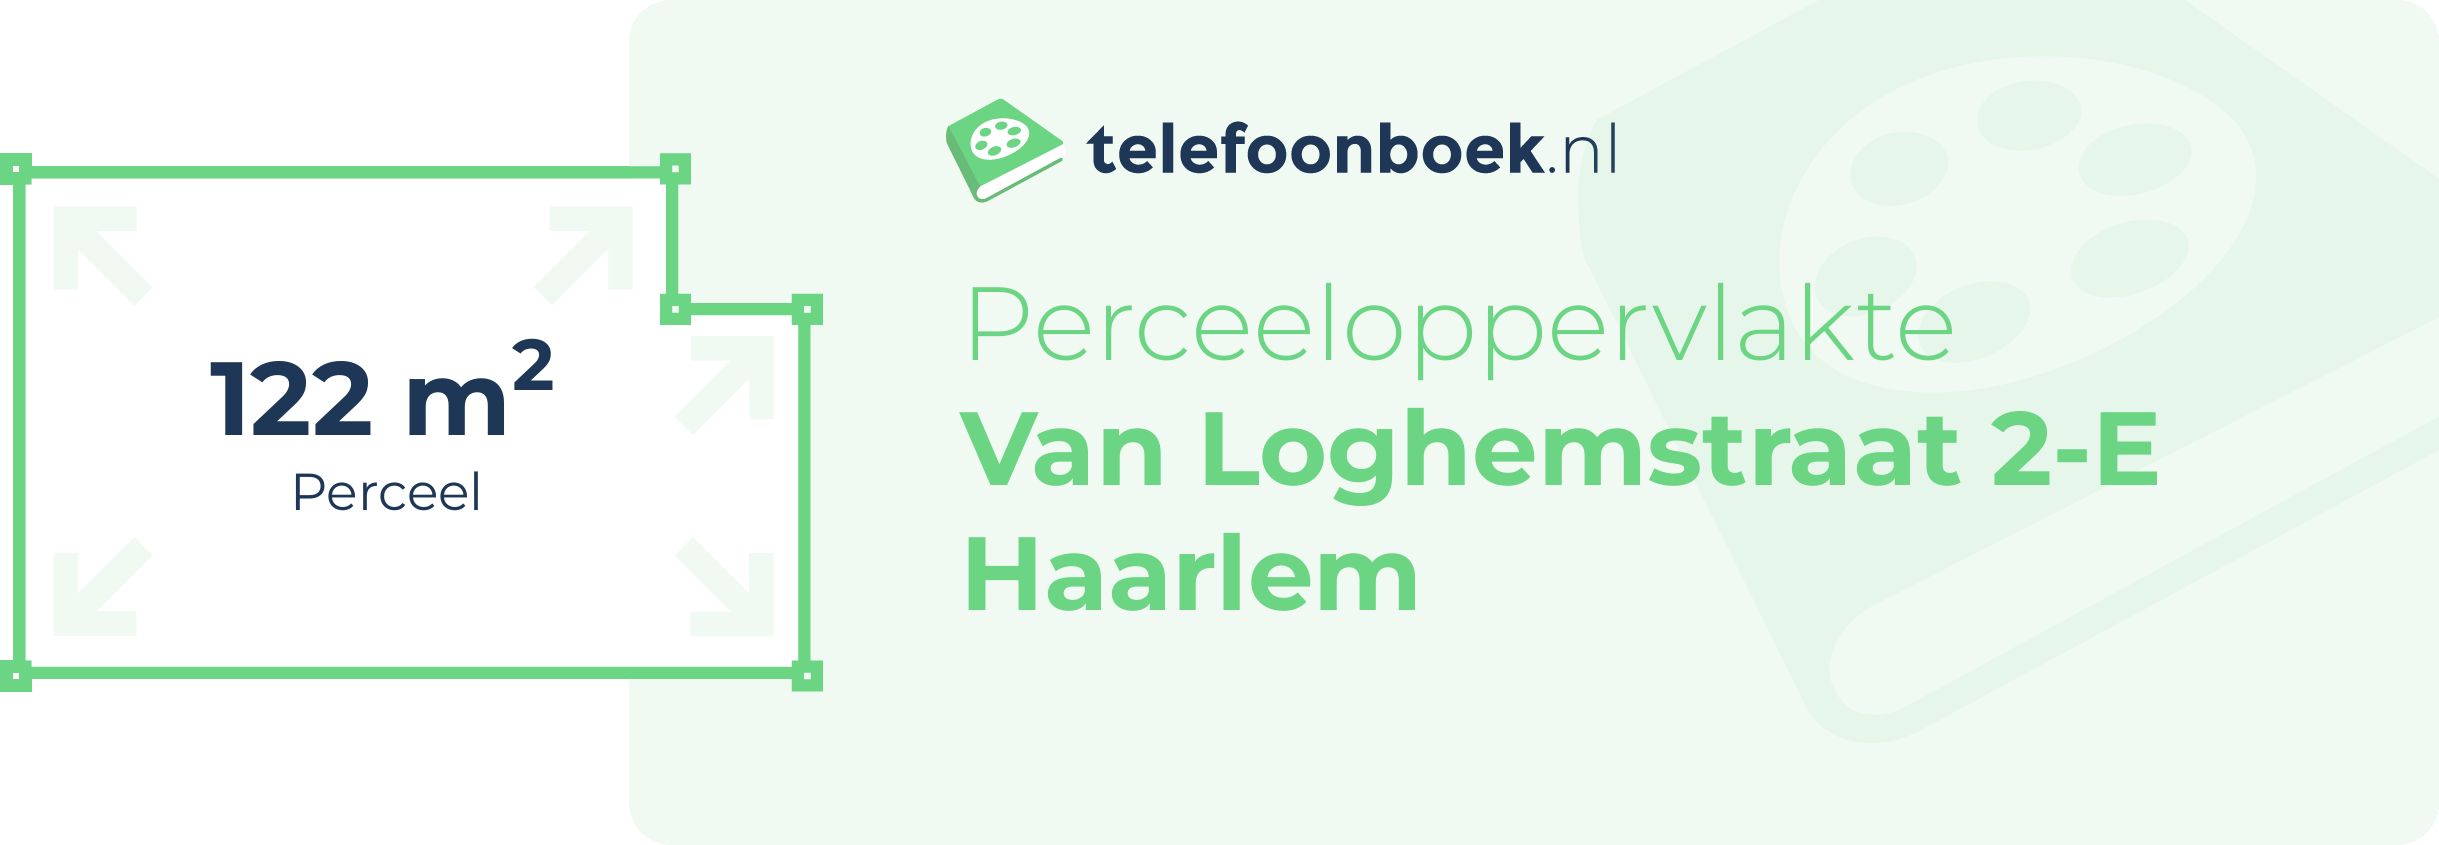 Perceeloppervlakte Van Loghemstraat 2-E Haarlem